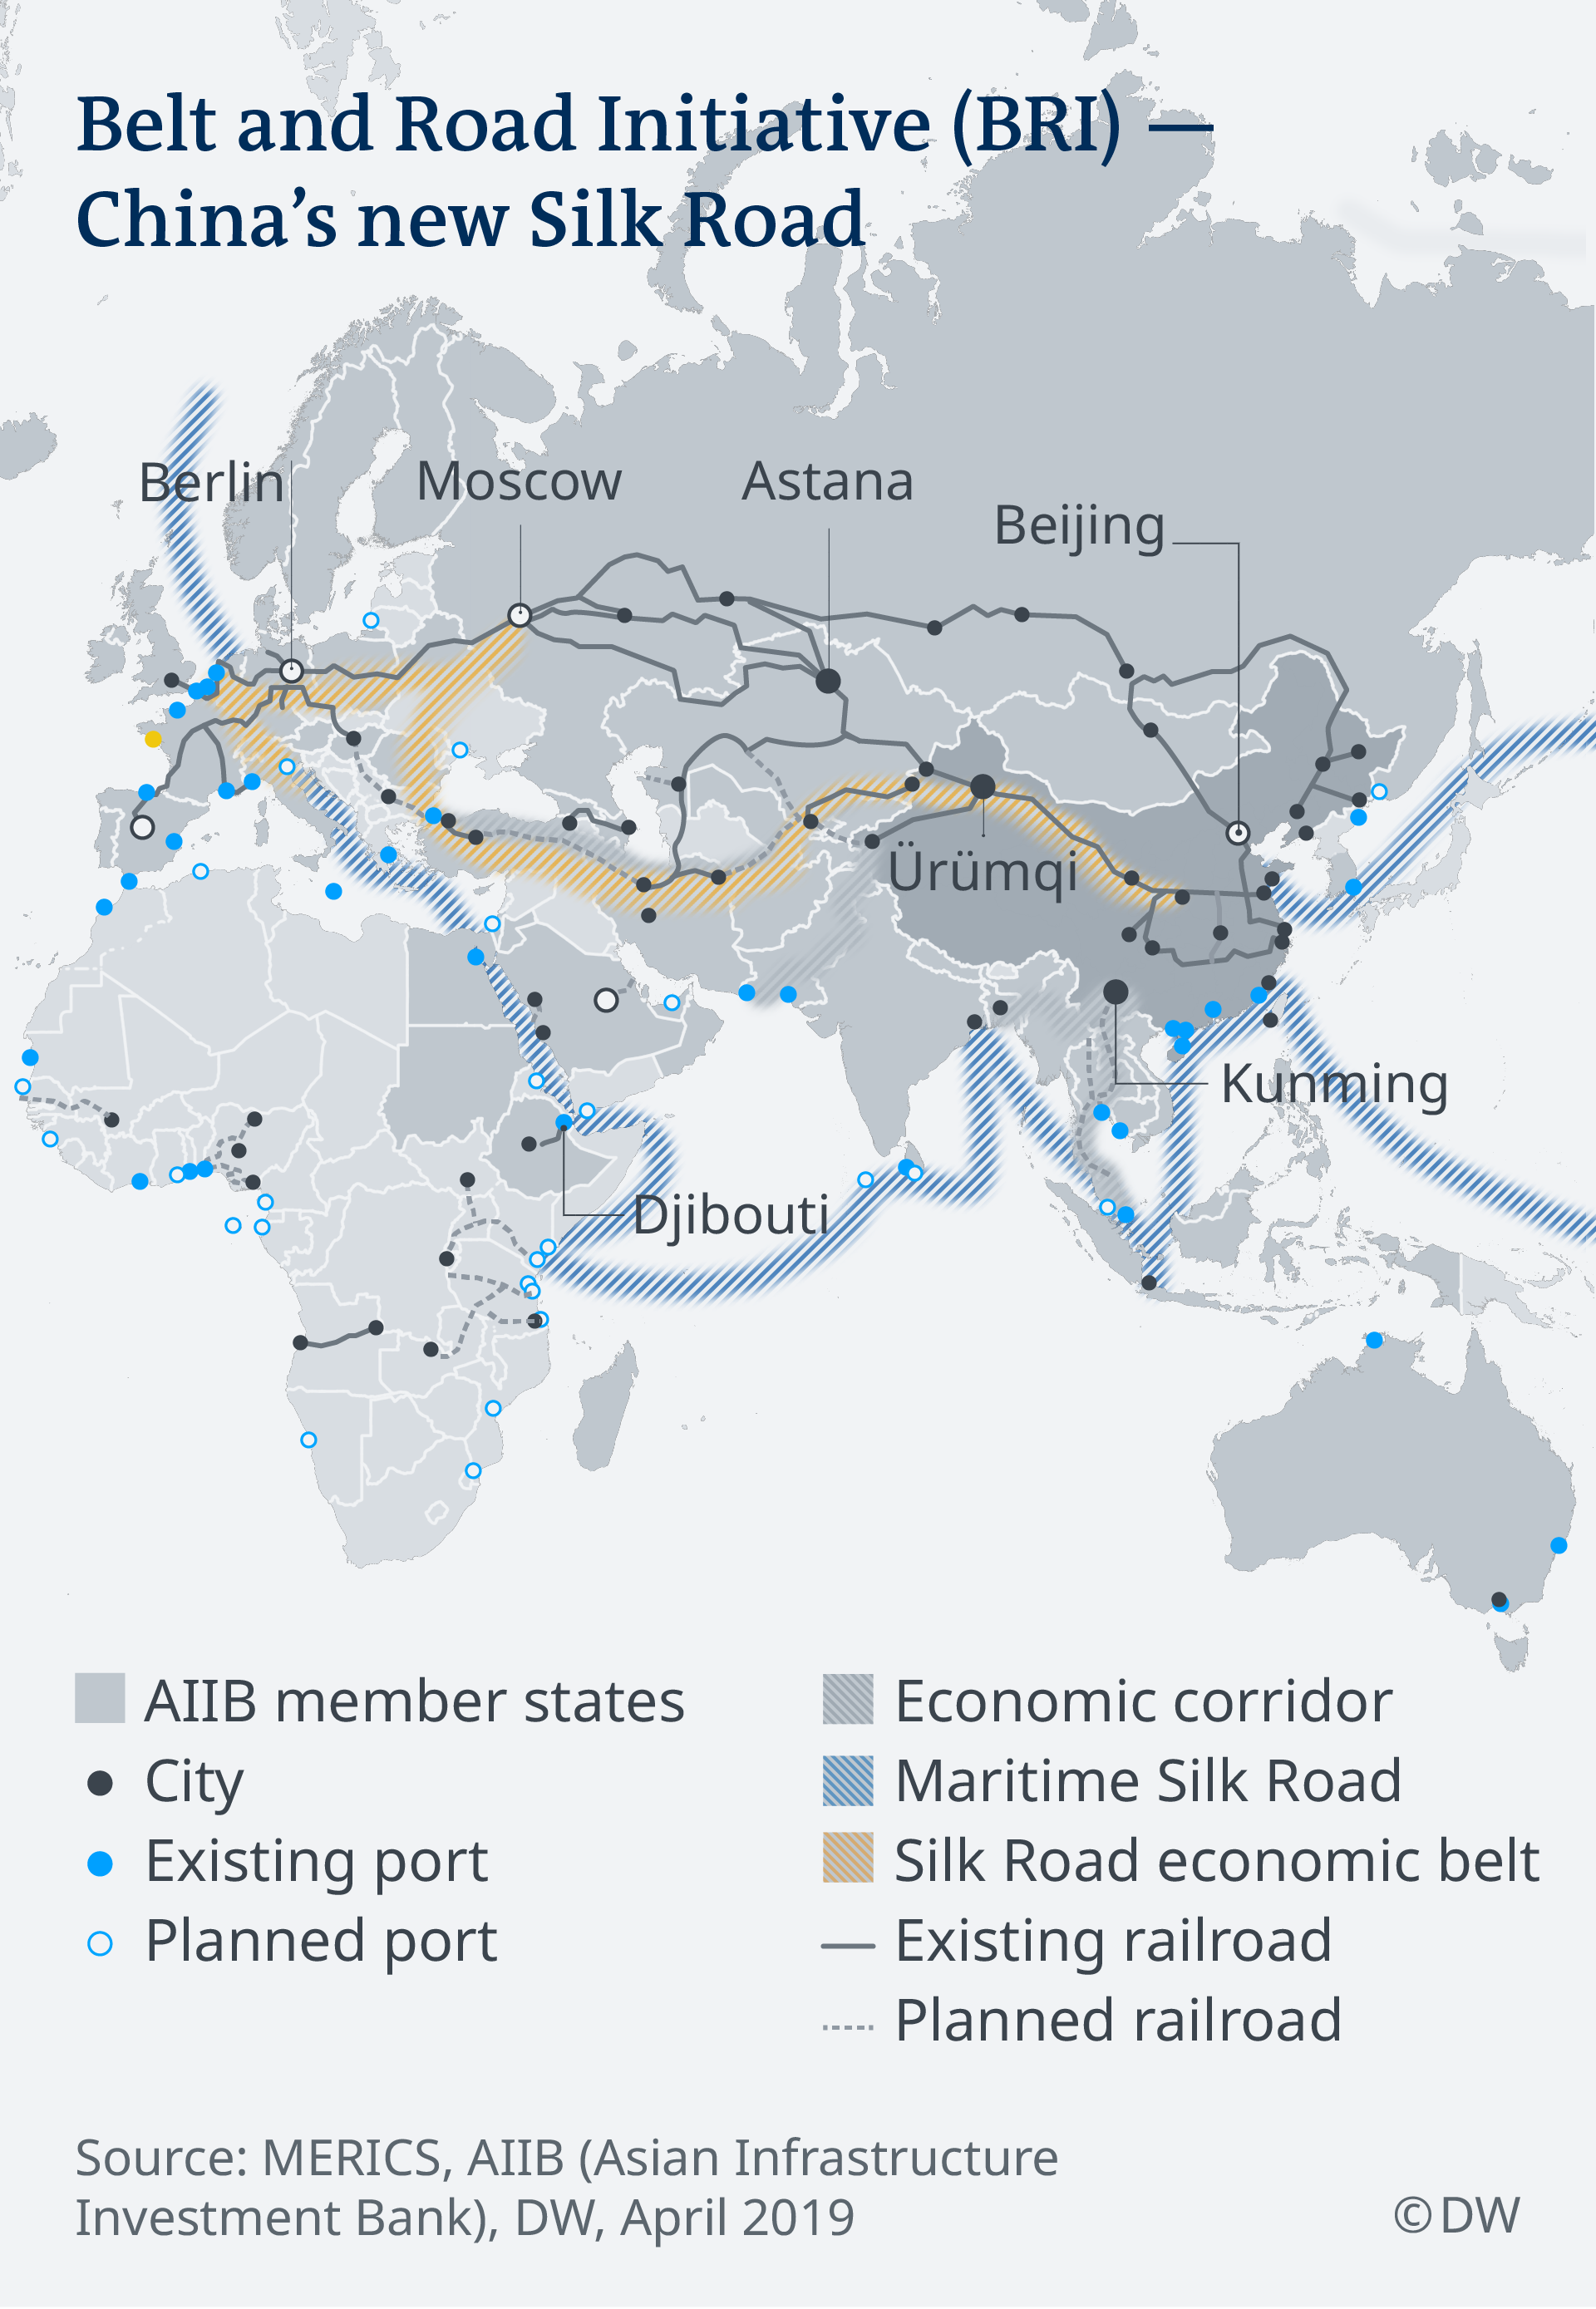 China's new silk road